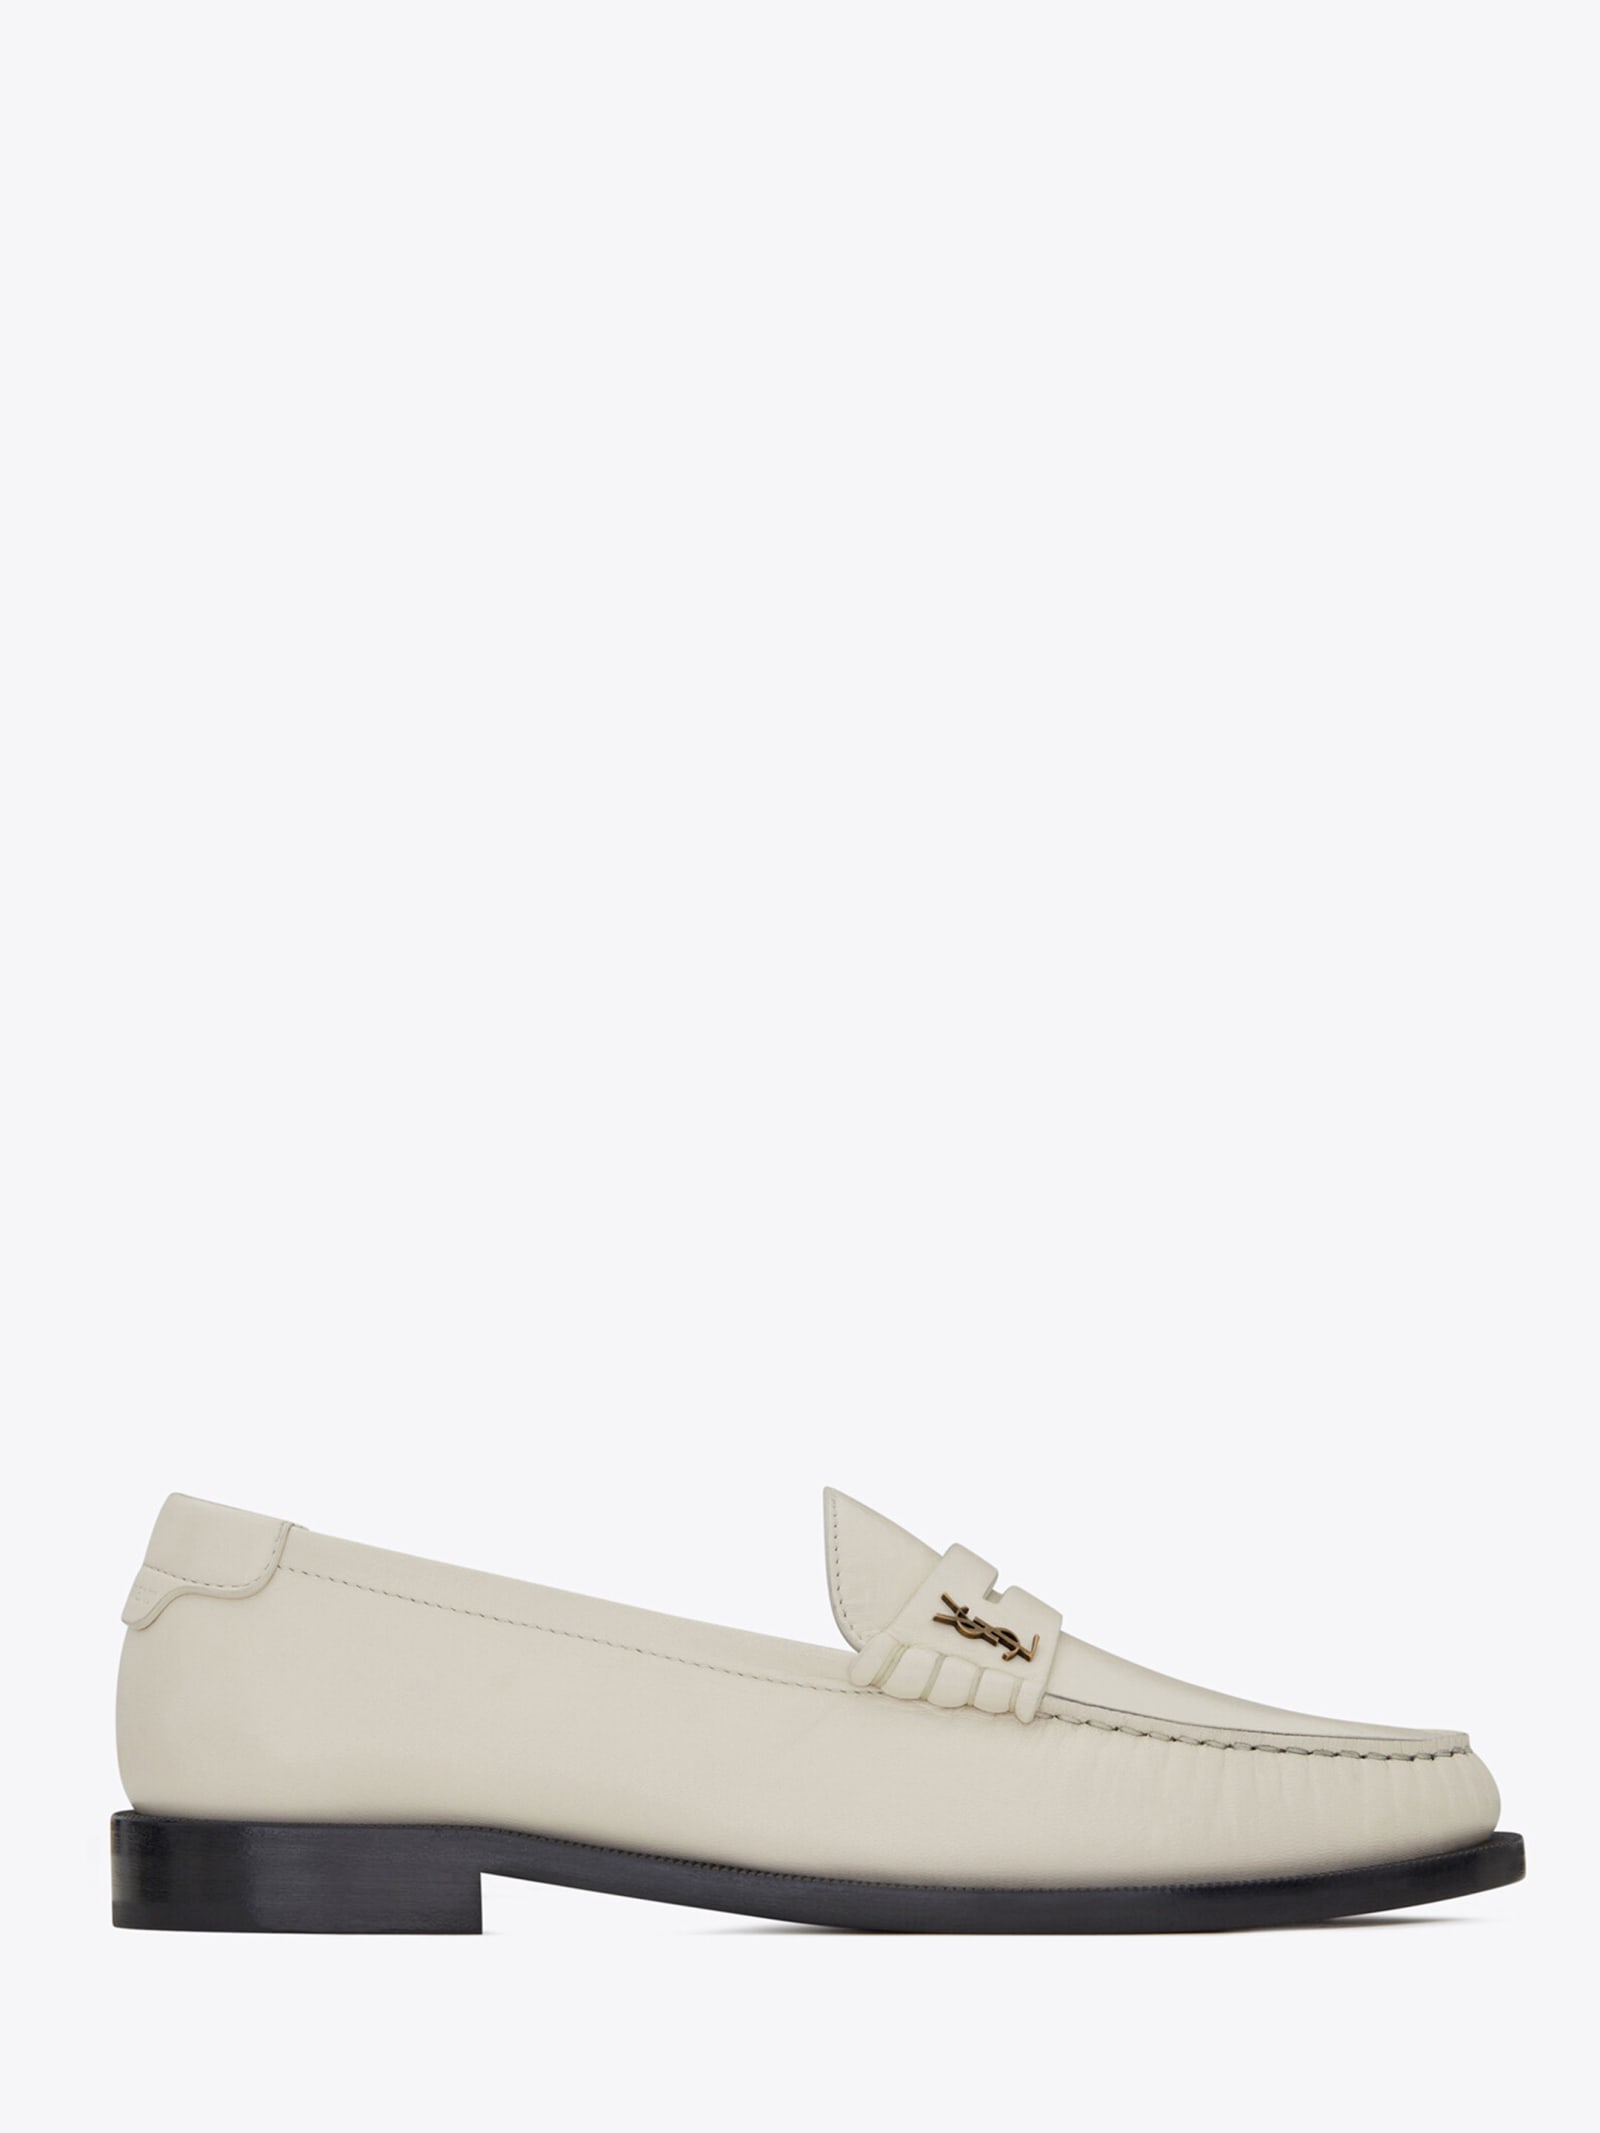 Saint Laurent Monogram Leather Loafers In Bianco